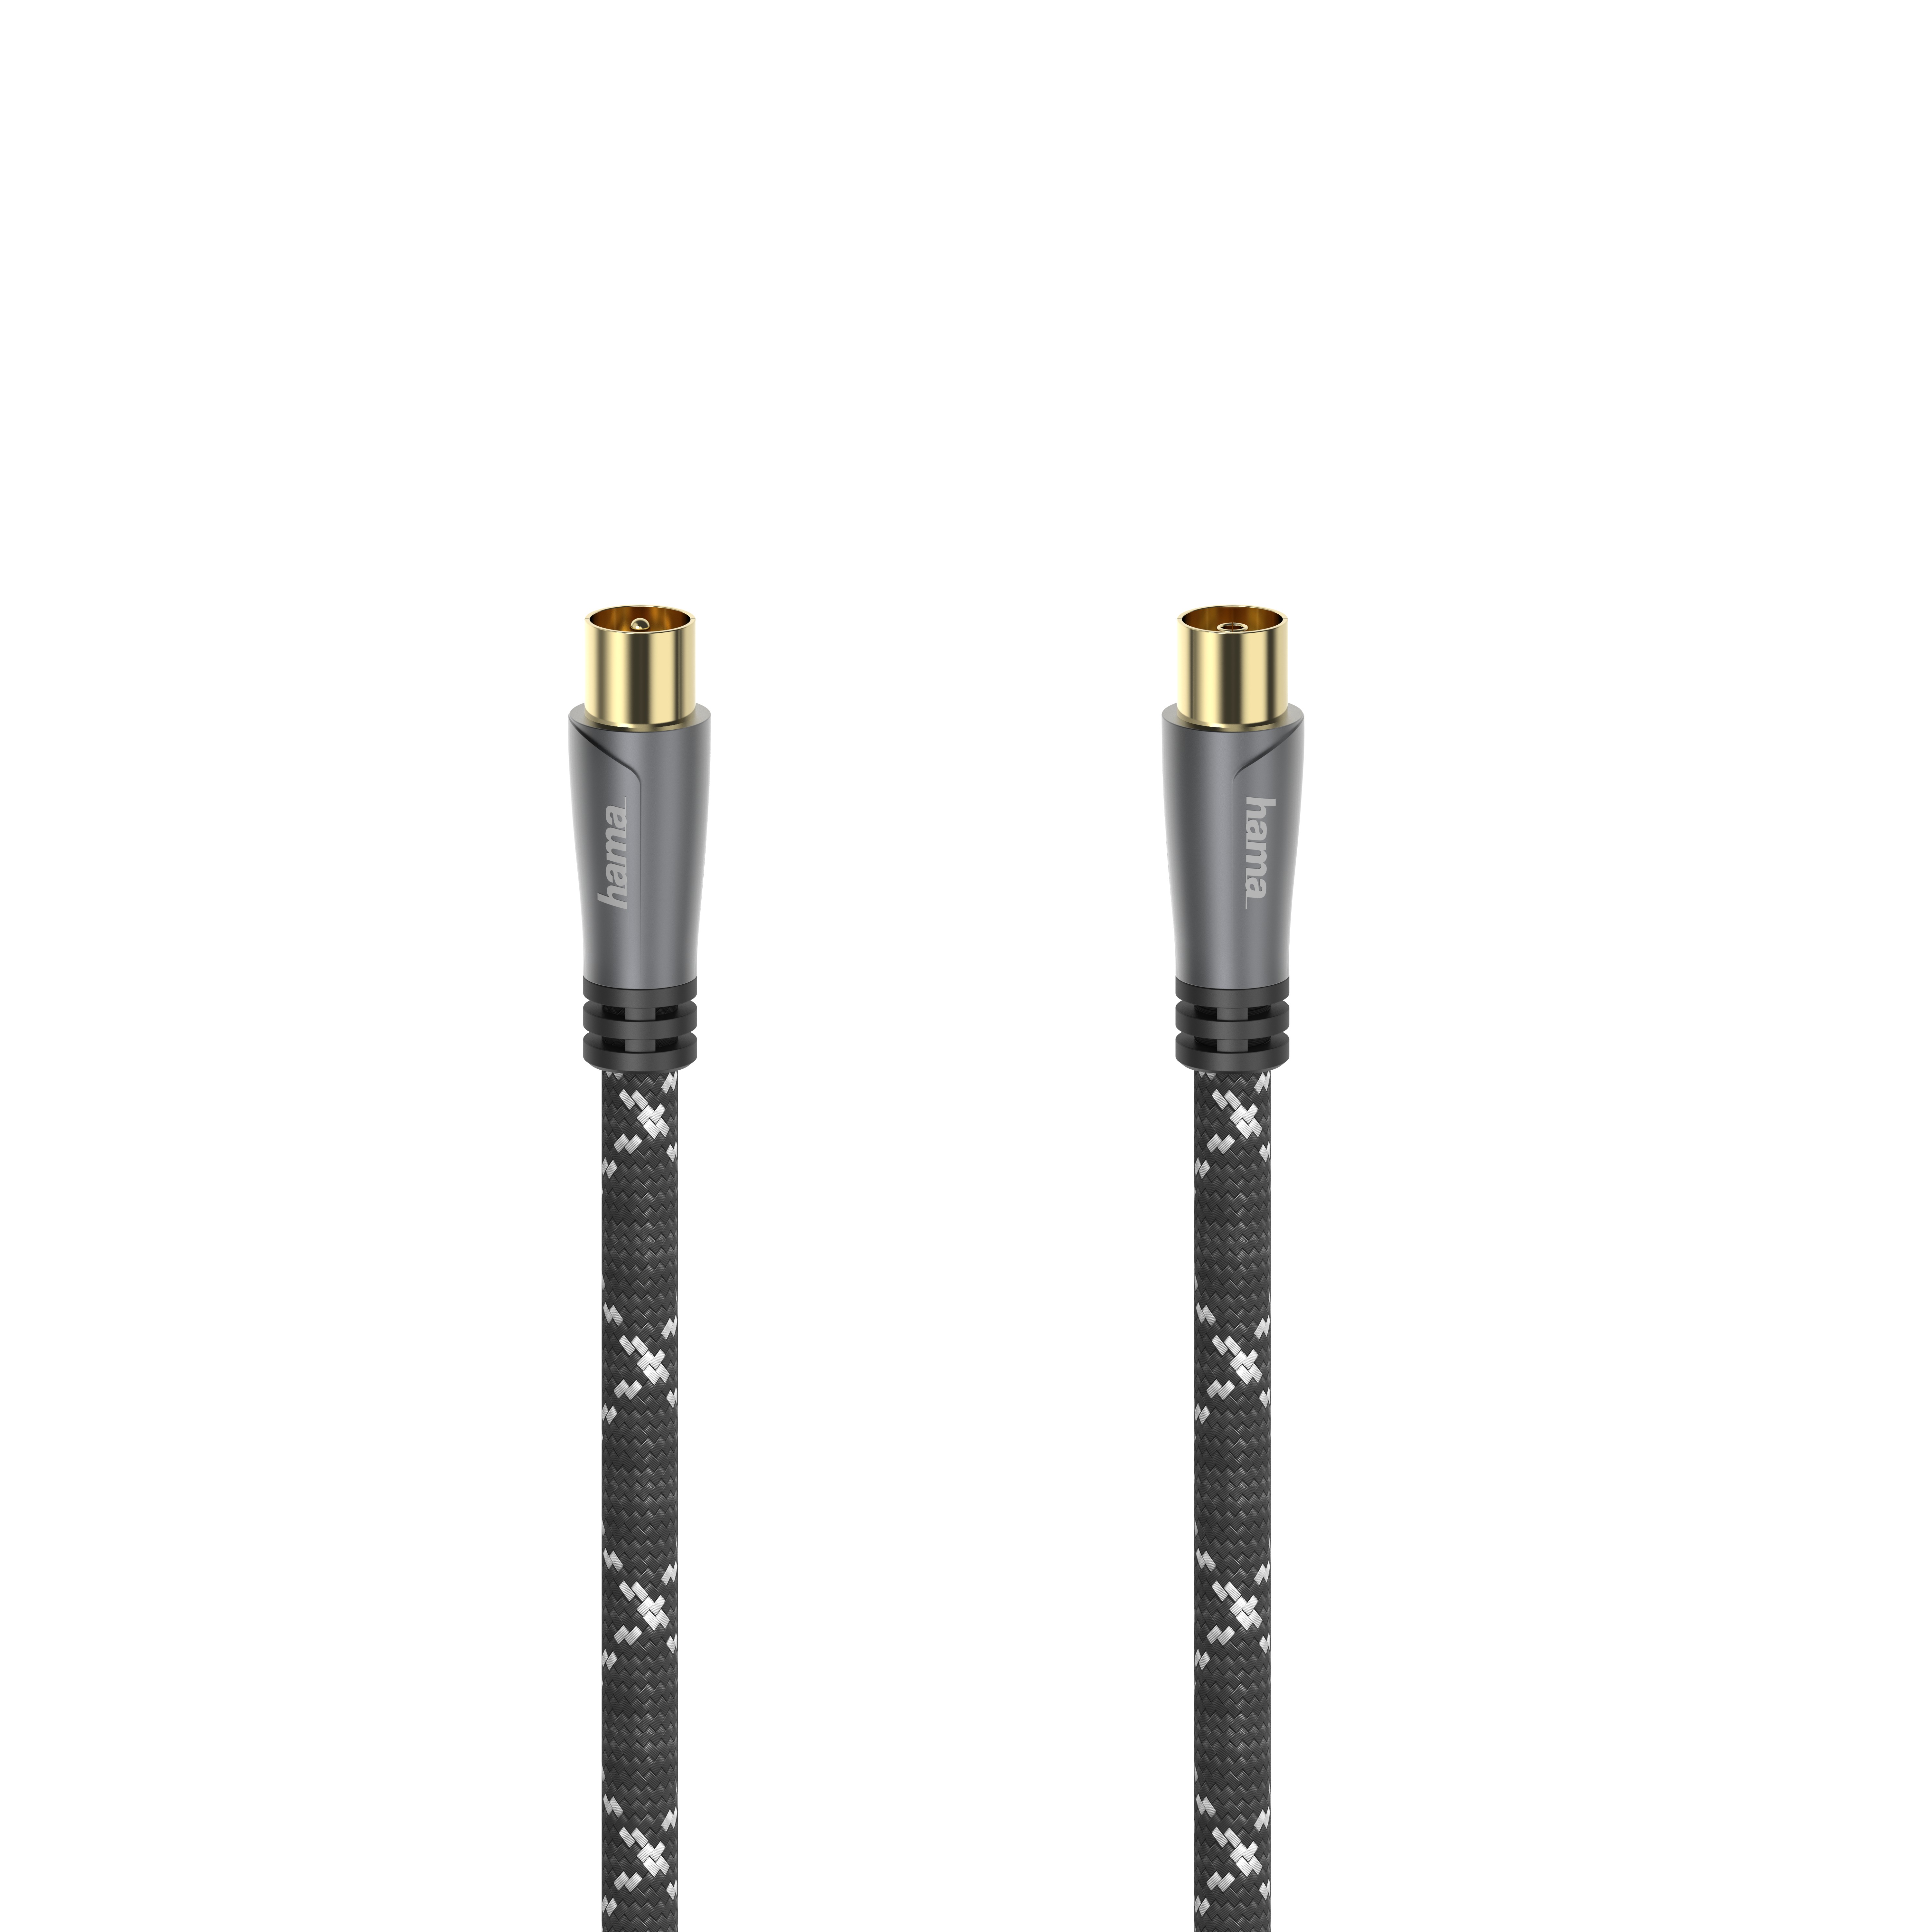 Hama Antennen-Kabel-Stecker-Kupplung, Metall, vergoldet, 10M